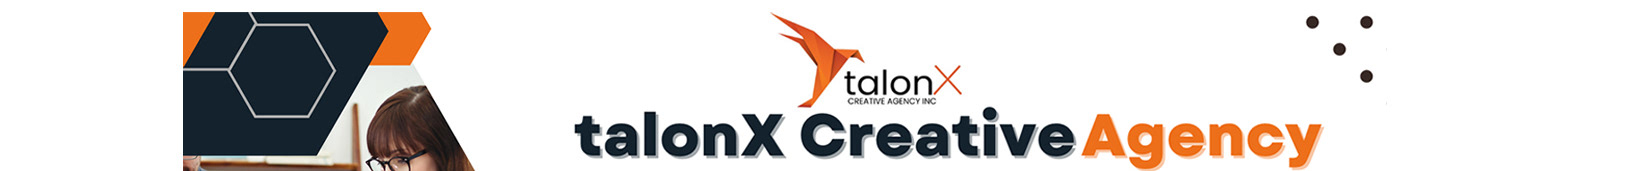 talonX Creative Agency's profile banner